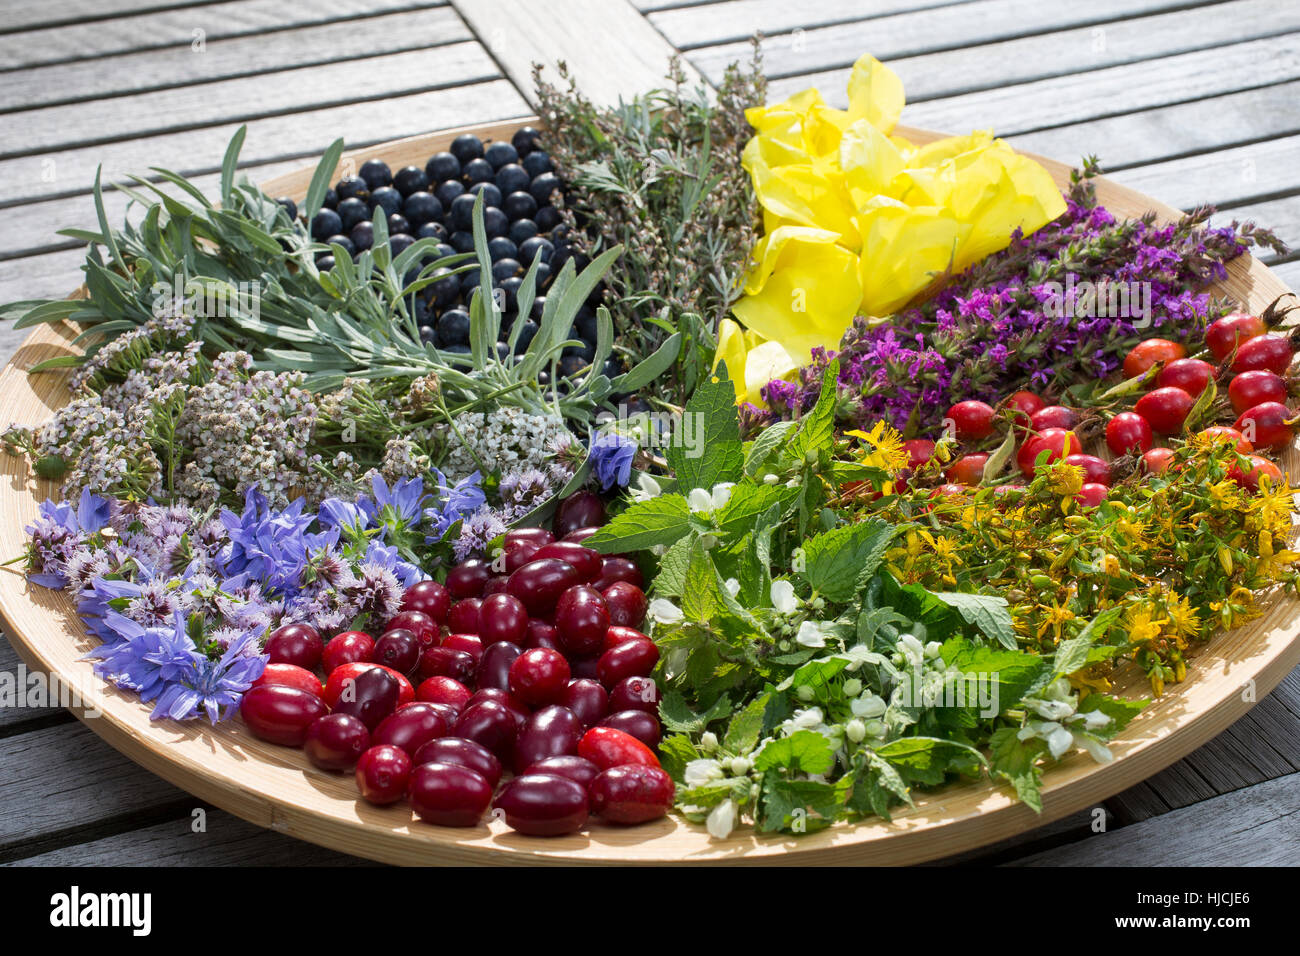 Spätsommer Blütenteller und Früchteteller. Blüten, Blumen, Kräuter, Kräuter sammeln, Kräuterernte, Blüten und Früchte auf einem Teller sortiert, bunt, Stock Photo